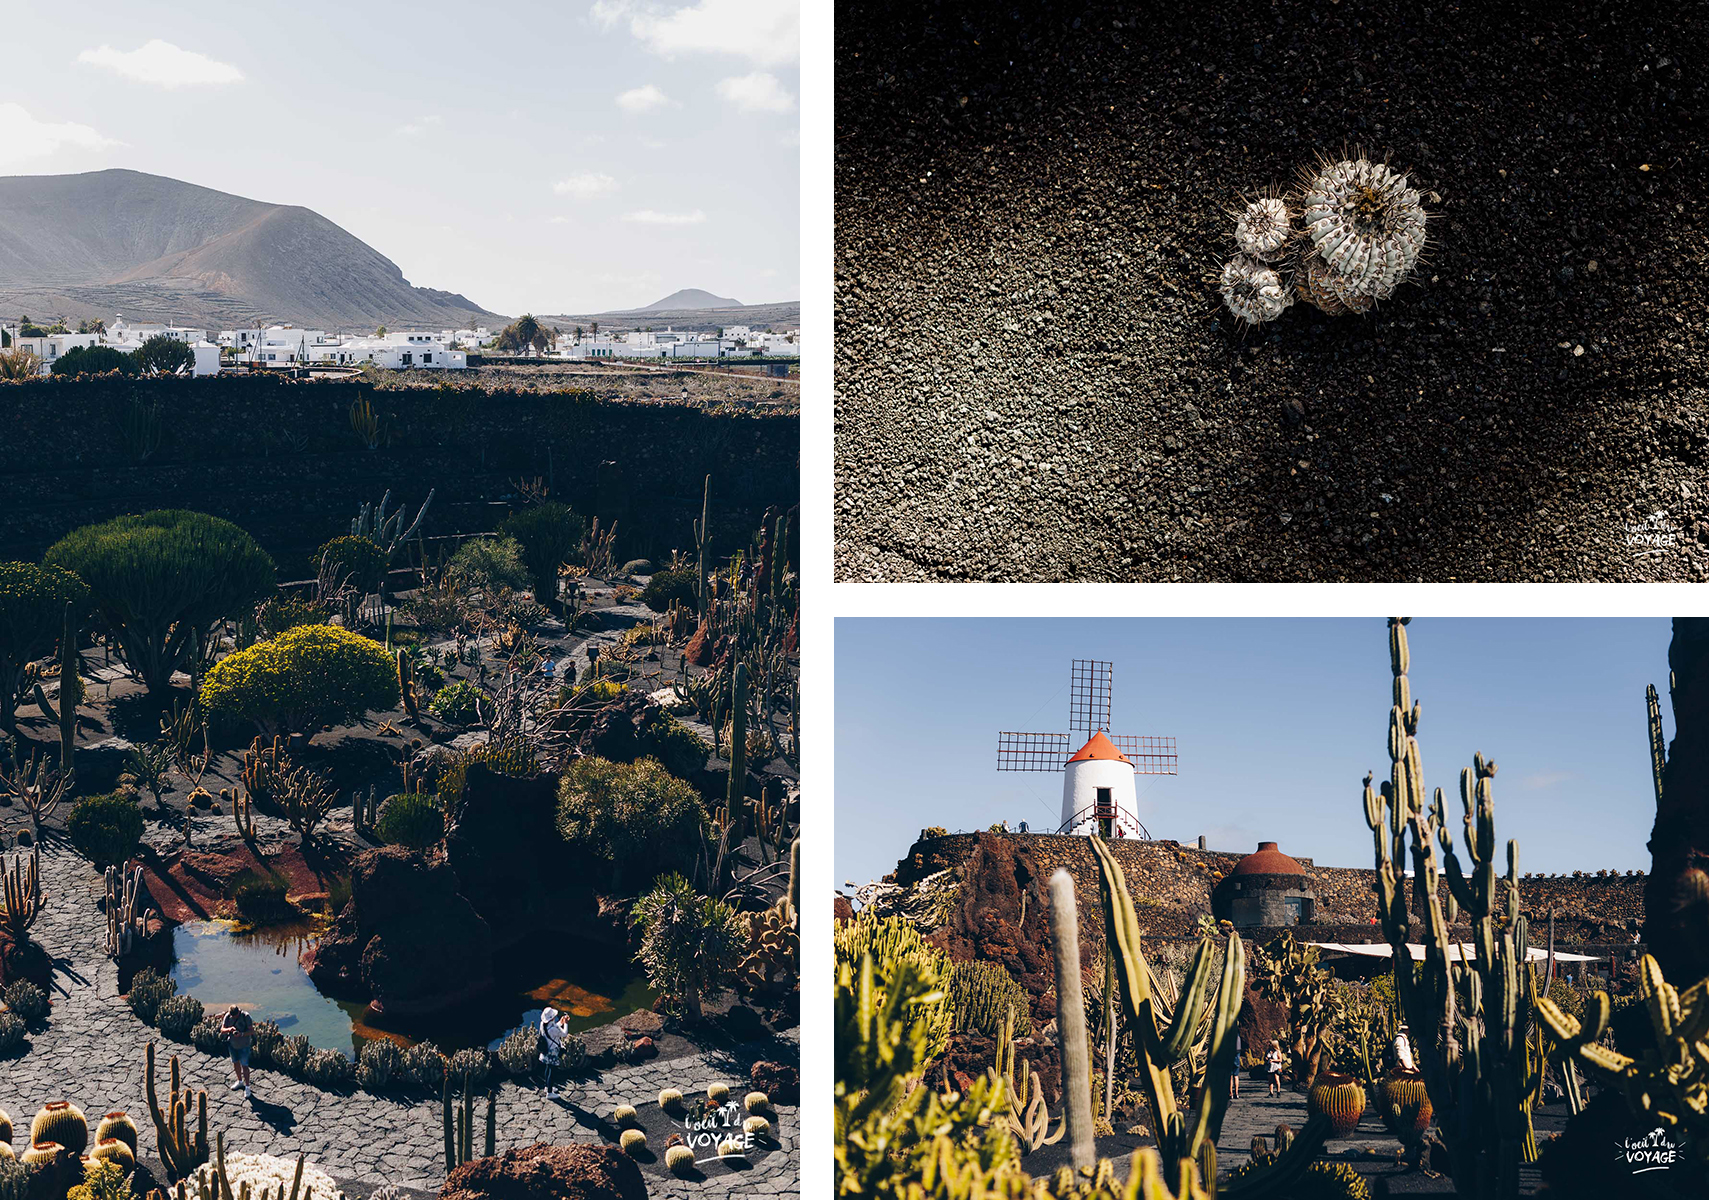 Jardin de Cactus à Guatiza, Lanzarote, par L'oeil de voyage, french travel blogger